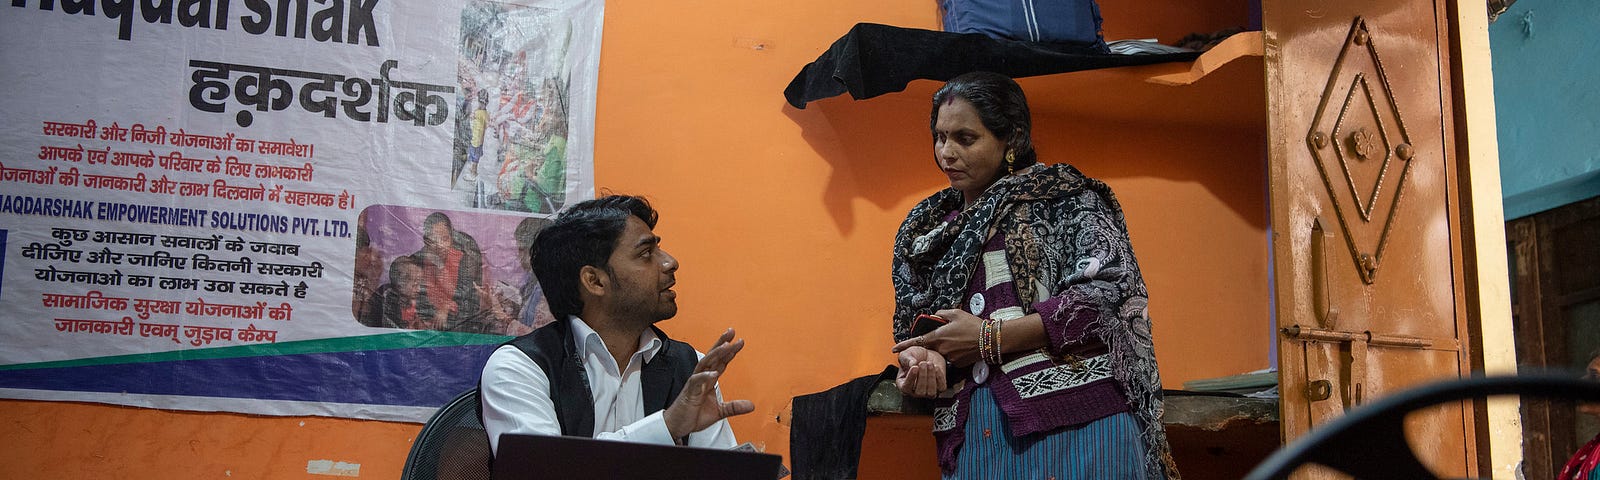 A Haqdarshak team member explains government welfare benefits to an Indian citizen